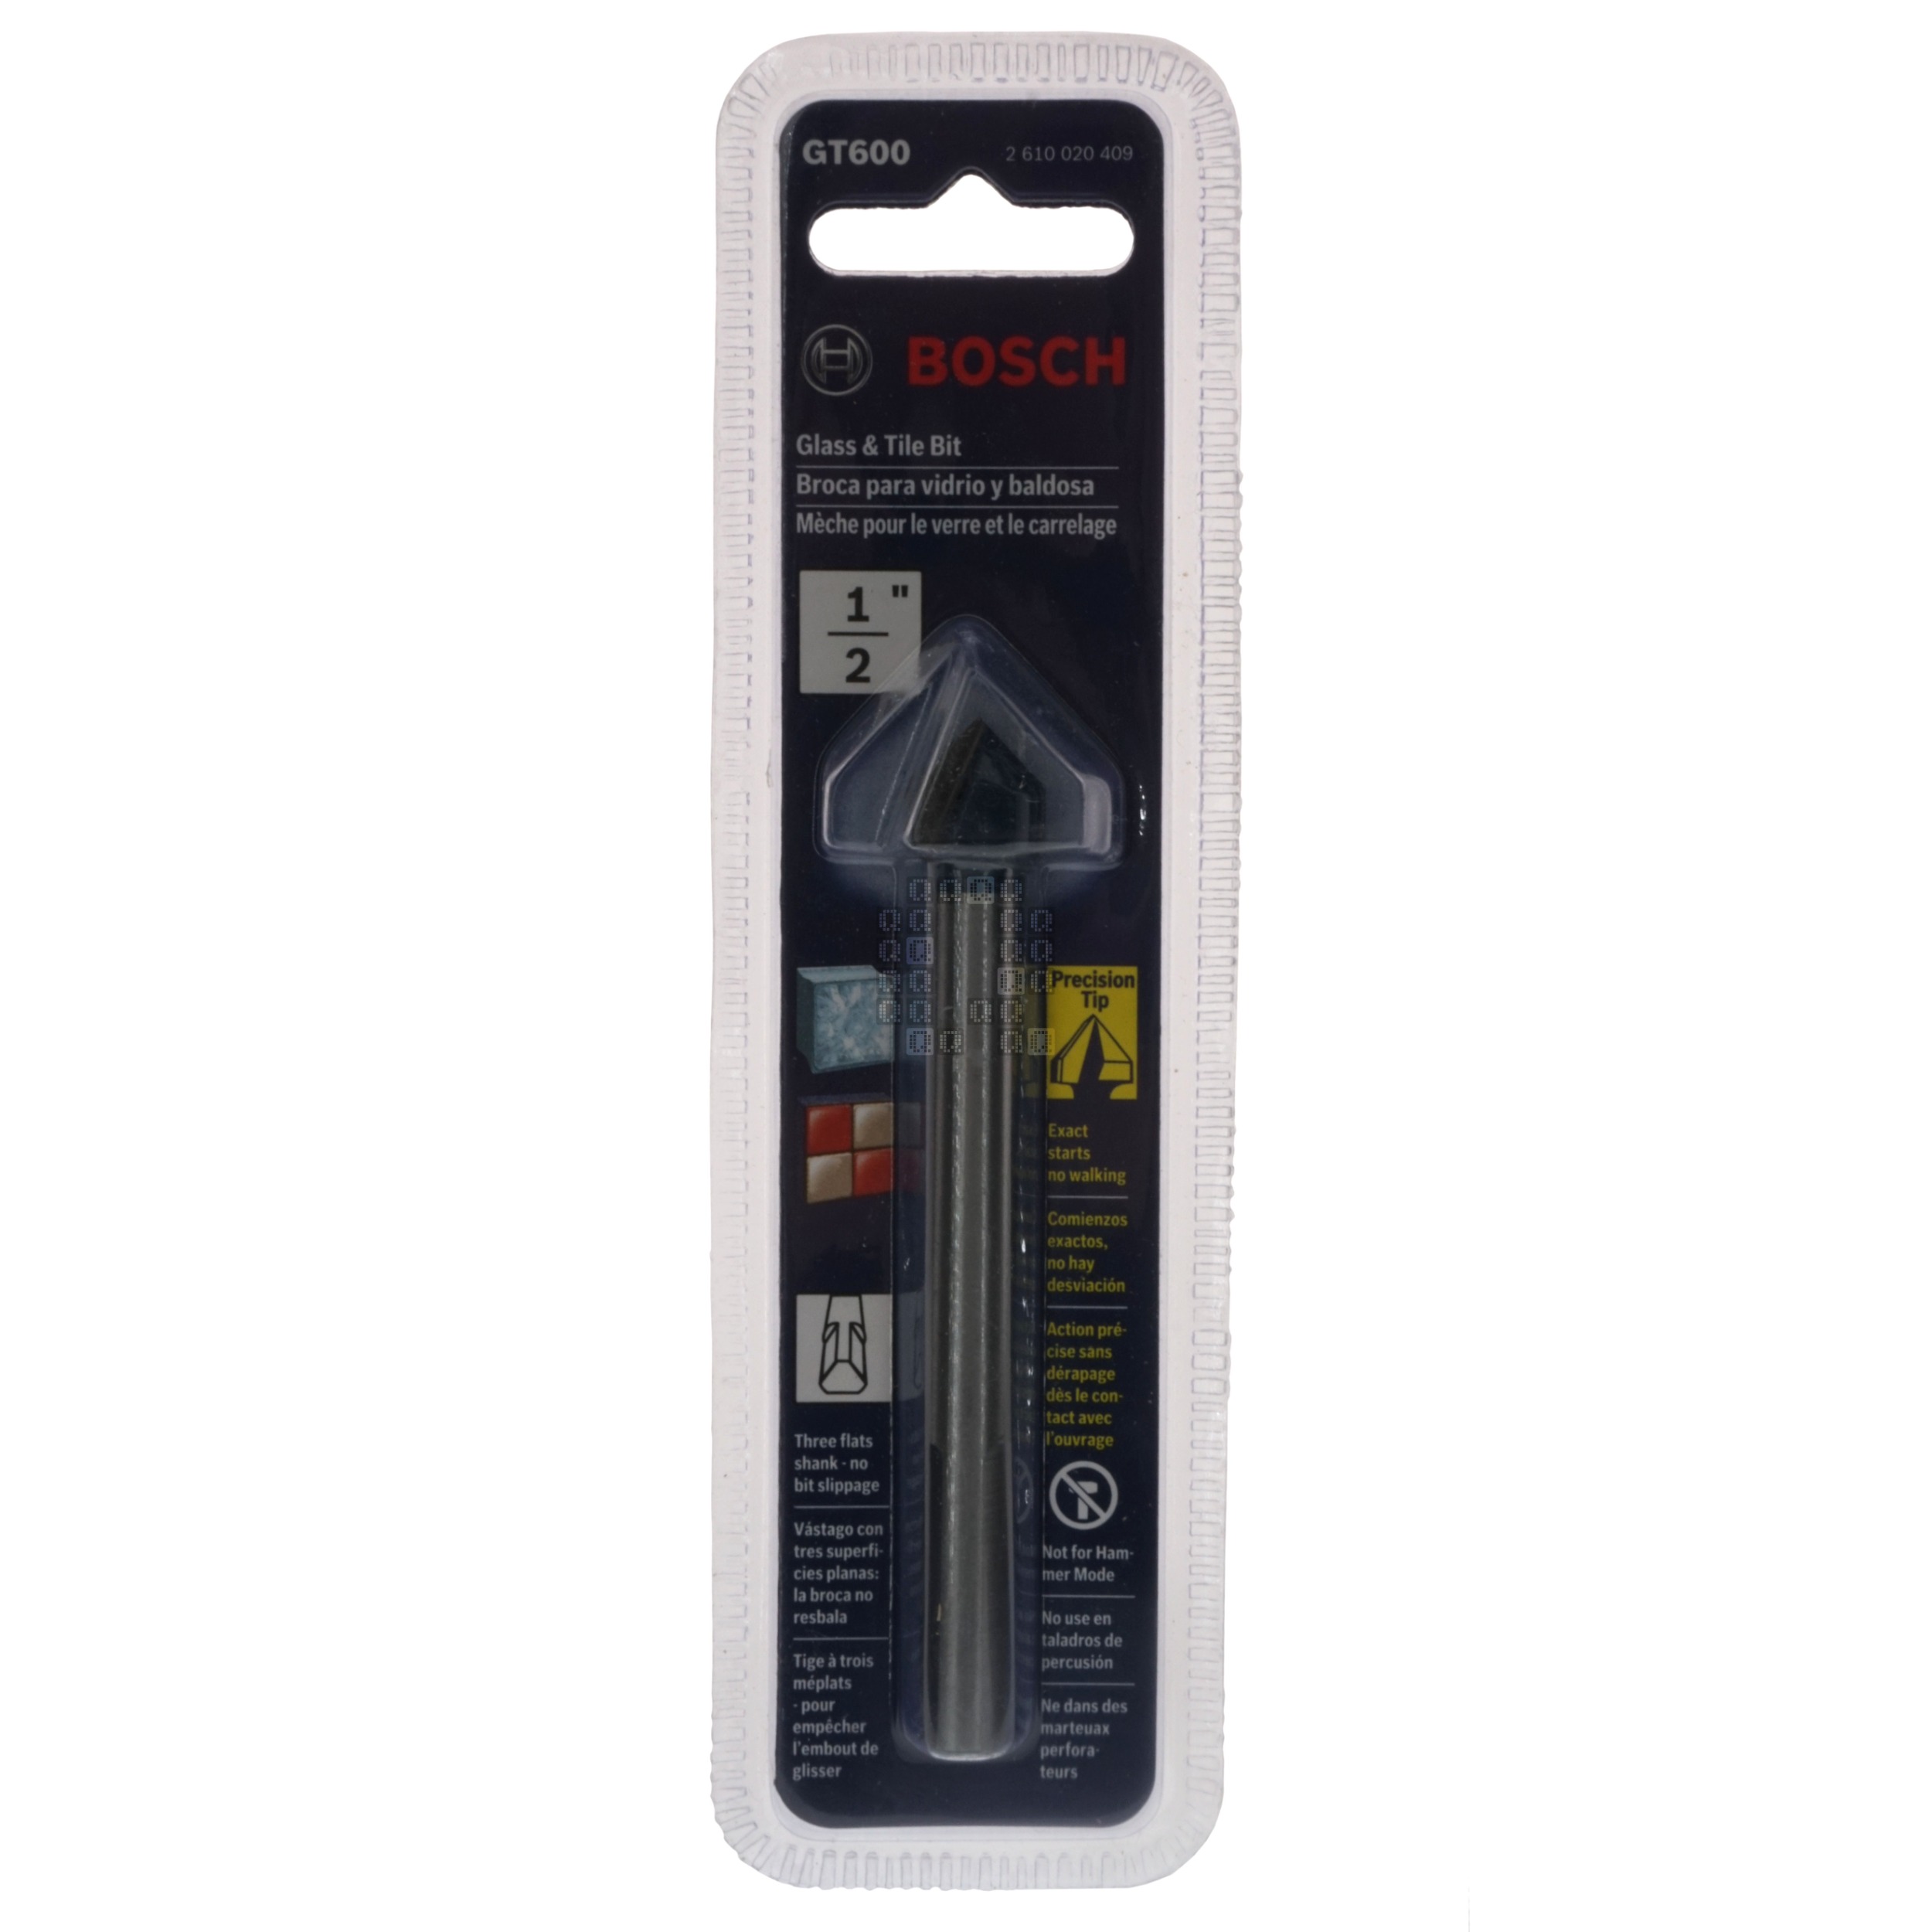 Bosch GT600 2610020409 1/2" Glass and Tile Bit